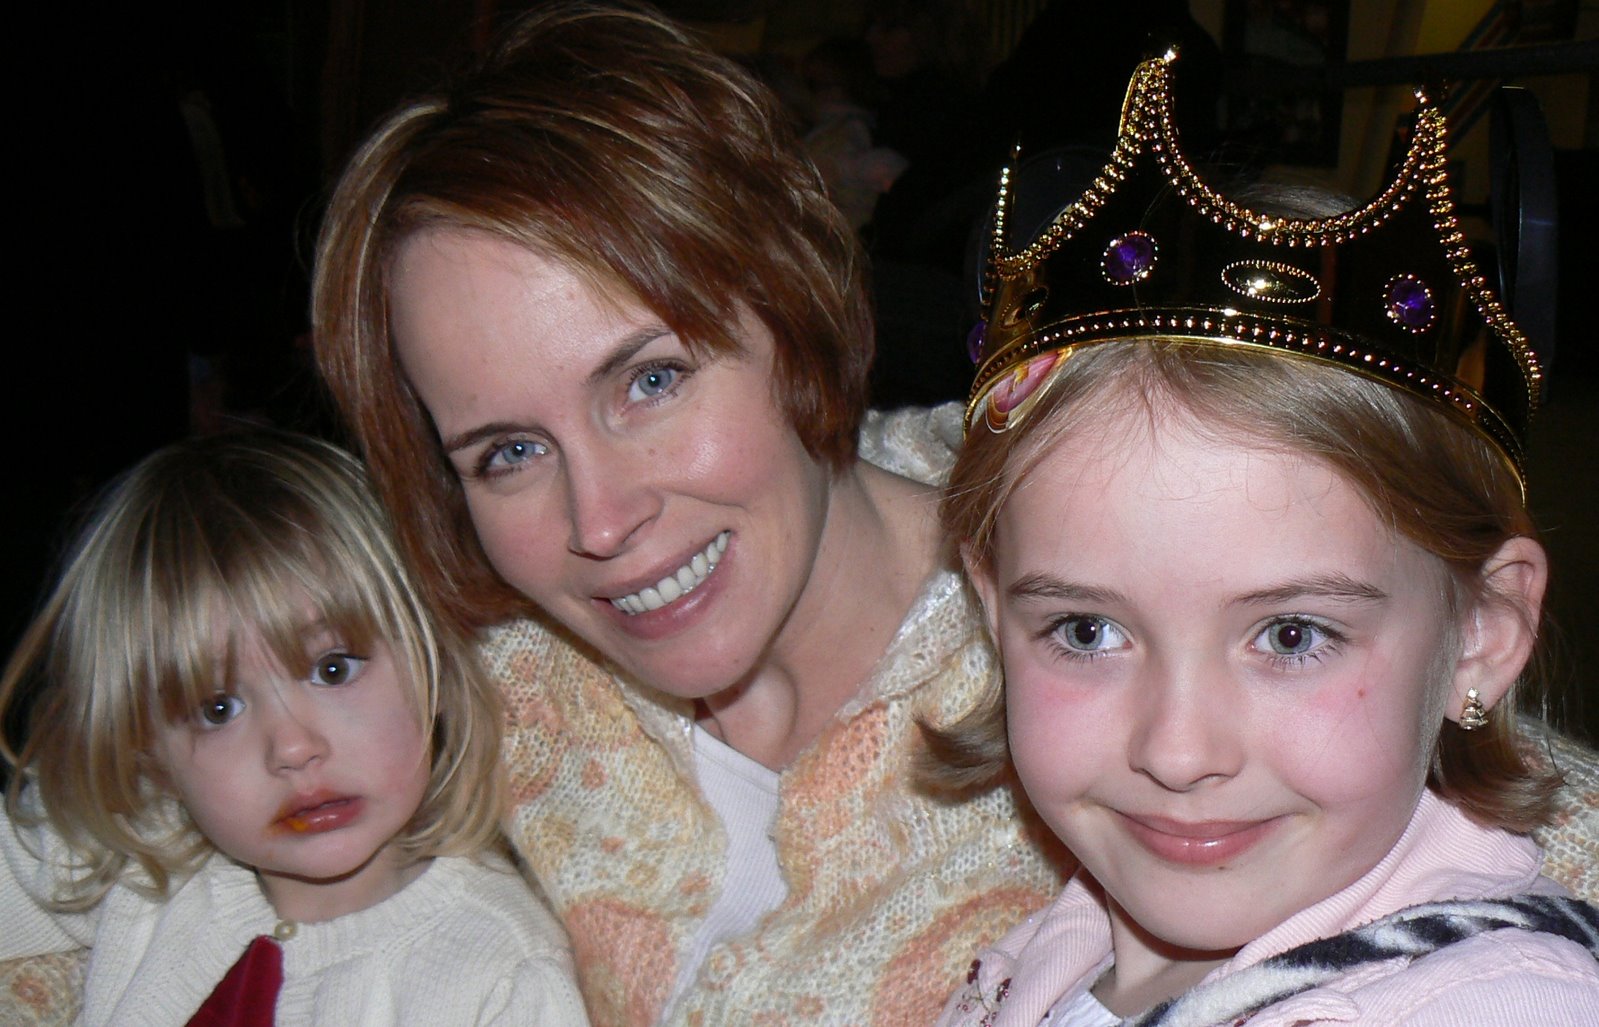 Me and my two princesses